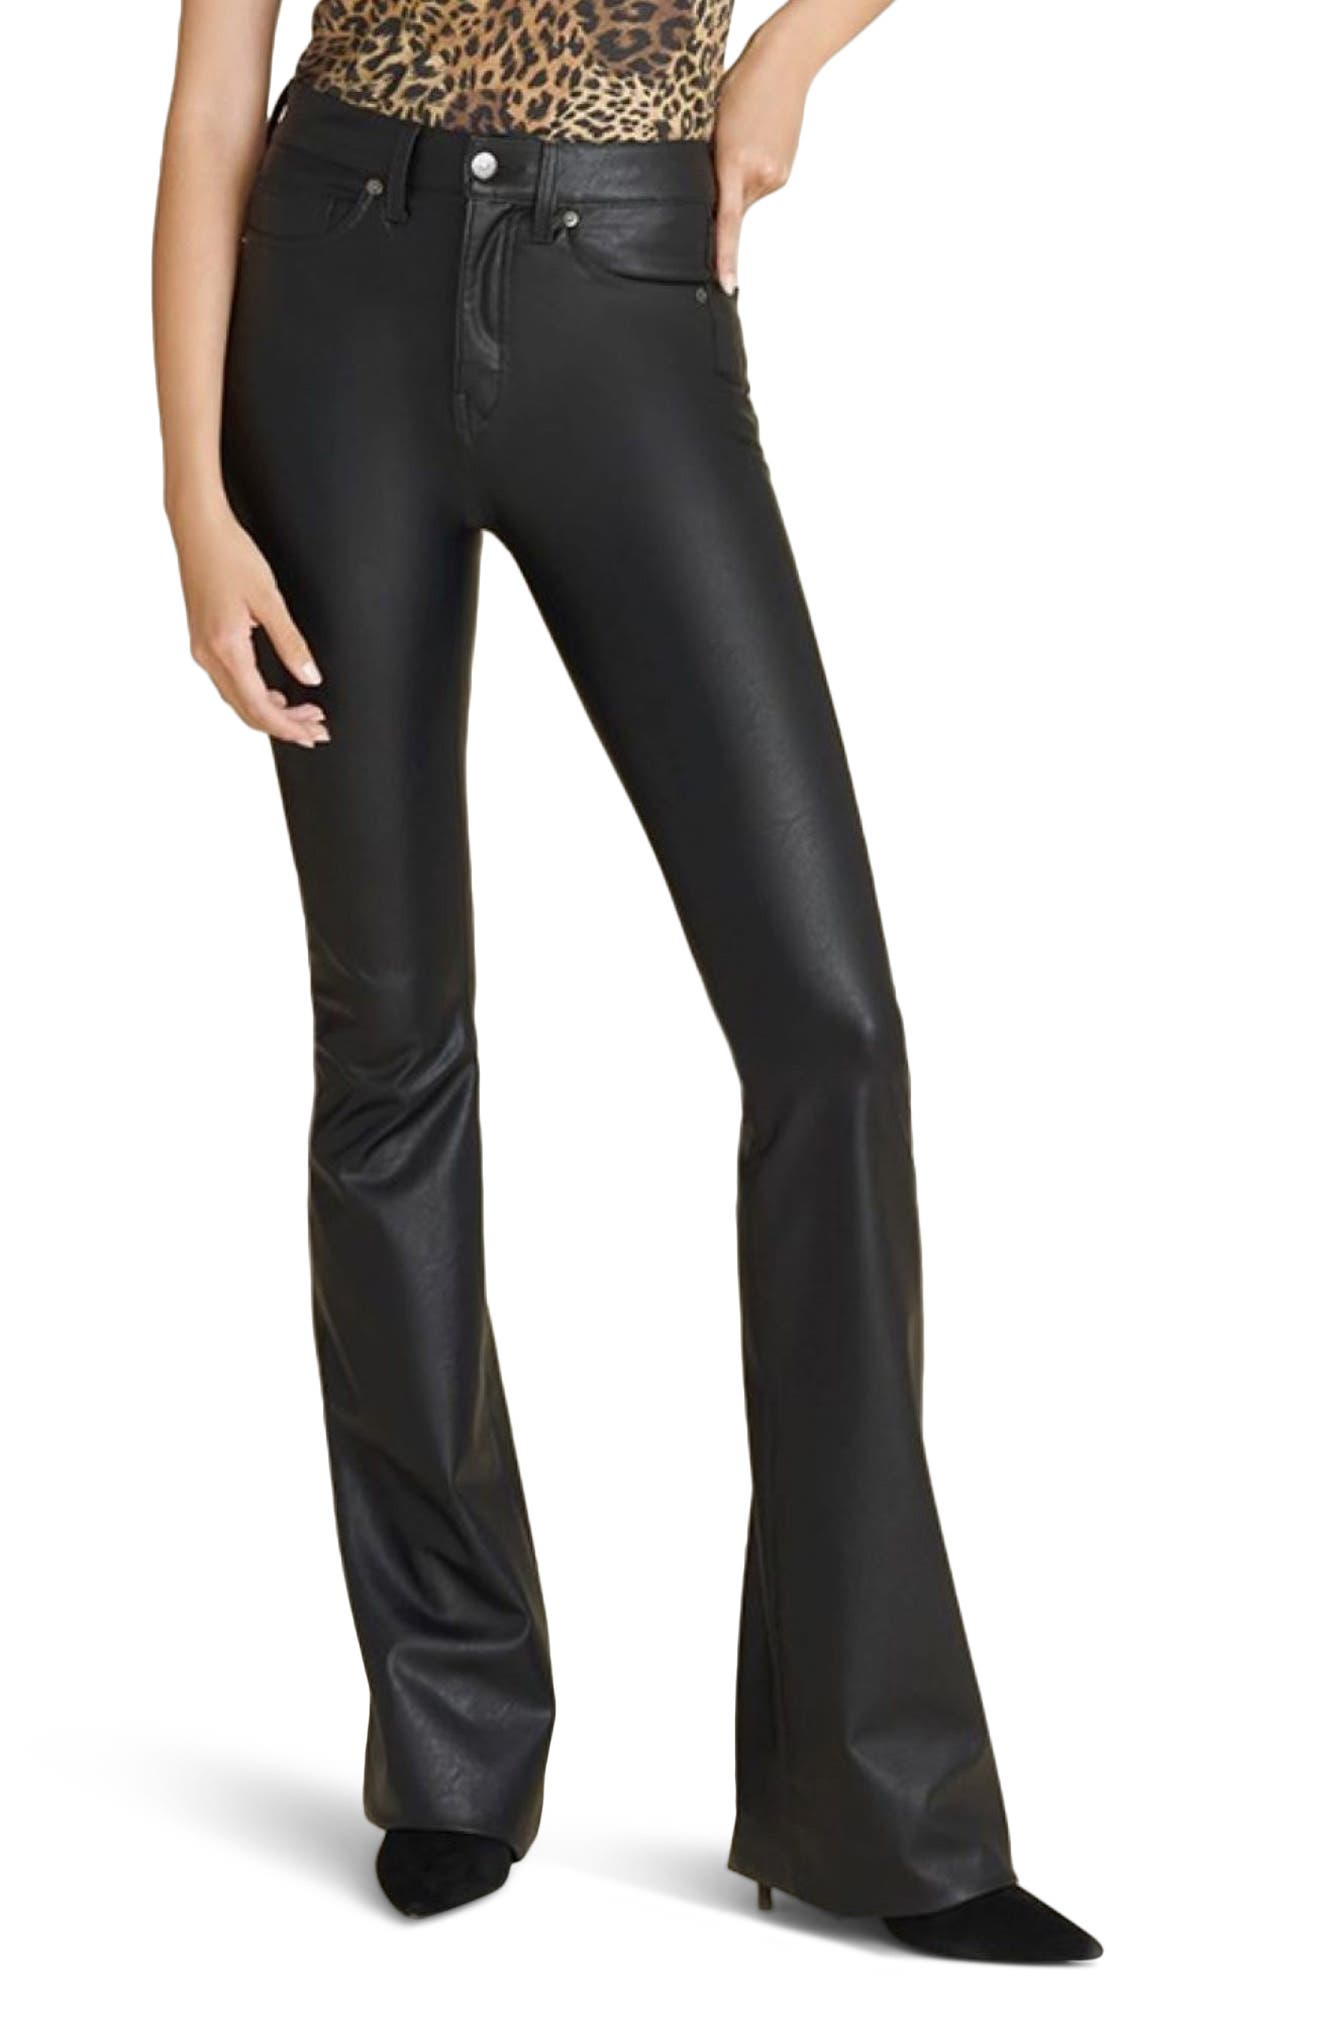 black faux leather pants womens